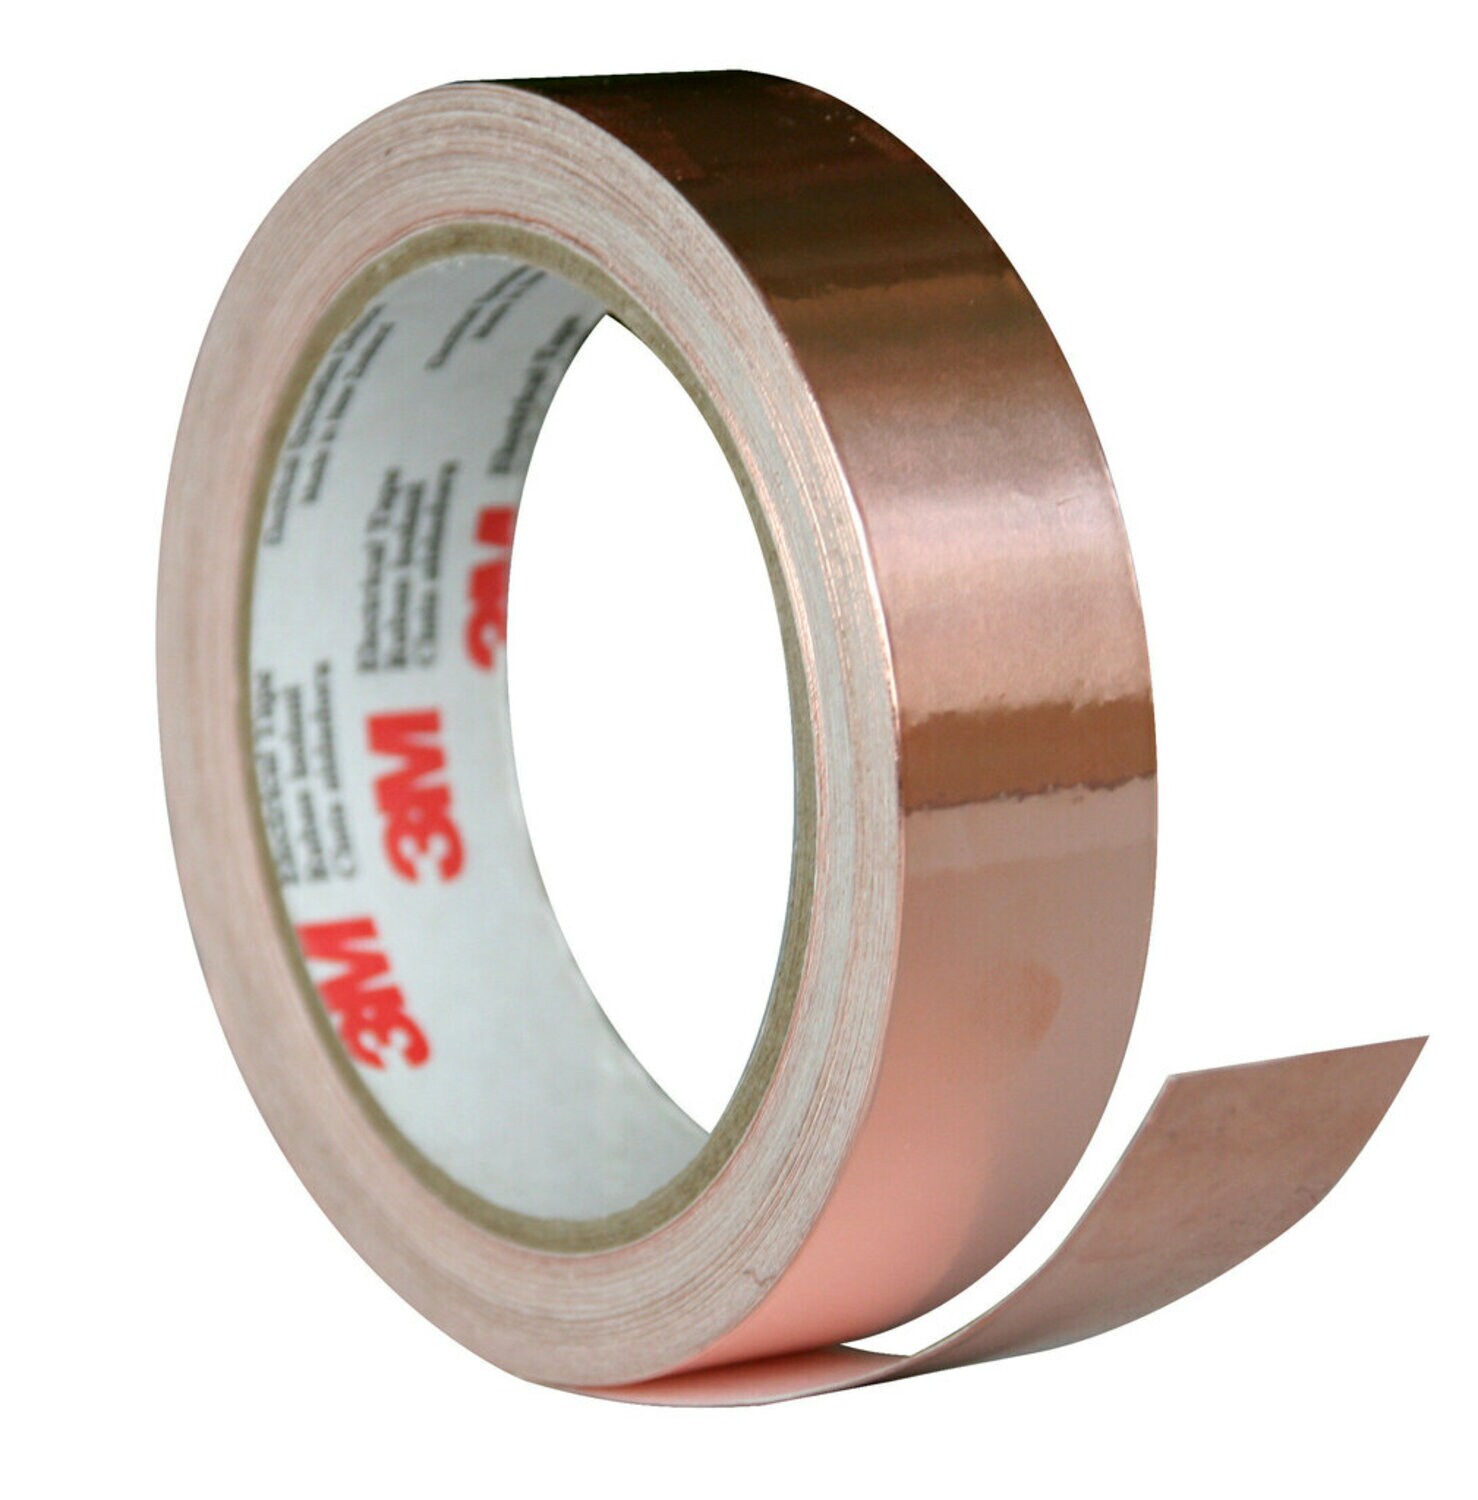 7010350294 - 3M Copper Foil EMI Shielding Tape 1181, 4 in x 18 yd, 3 in Paper Core,
3 Rolls/Case